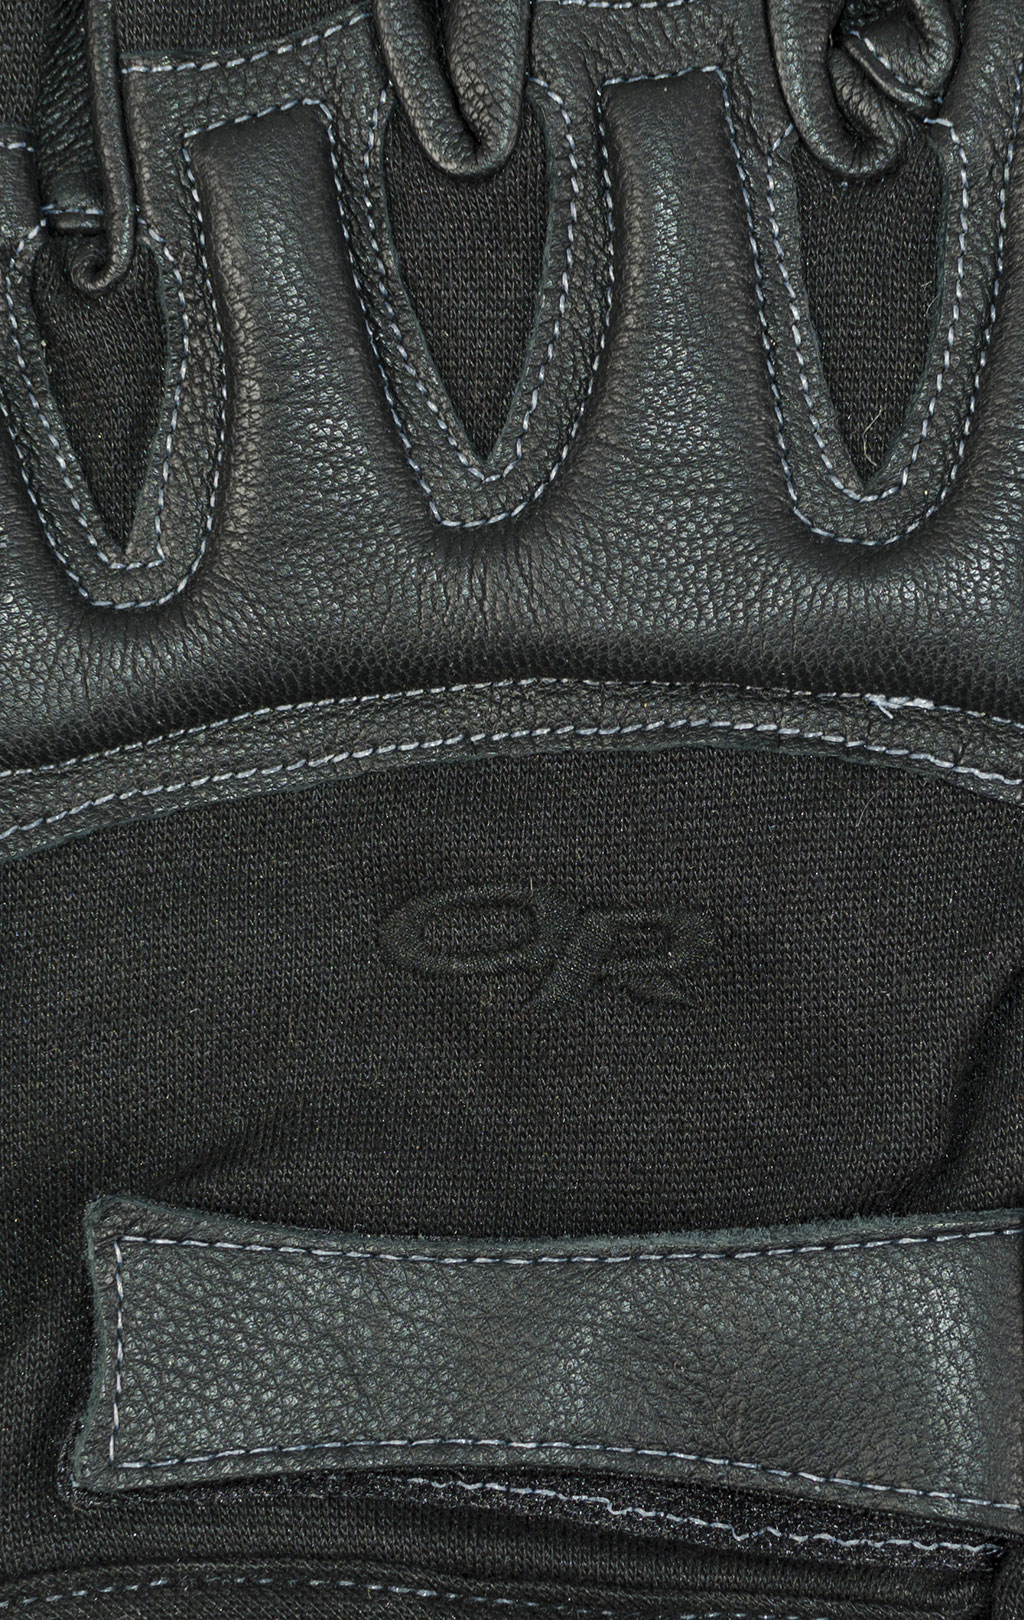 Перчатки OR ROCKFALL black 